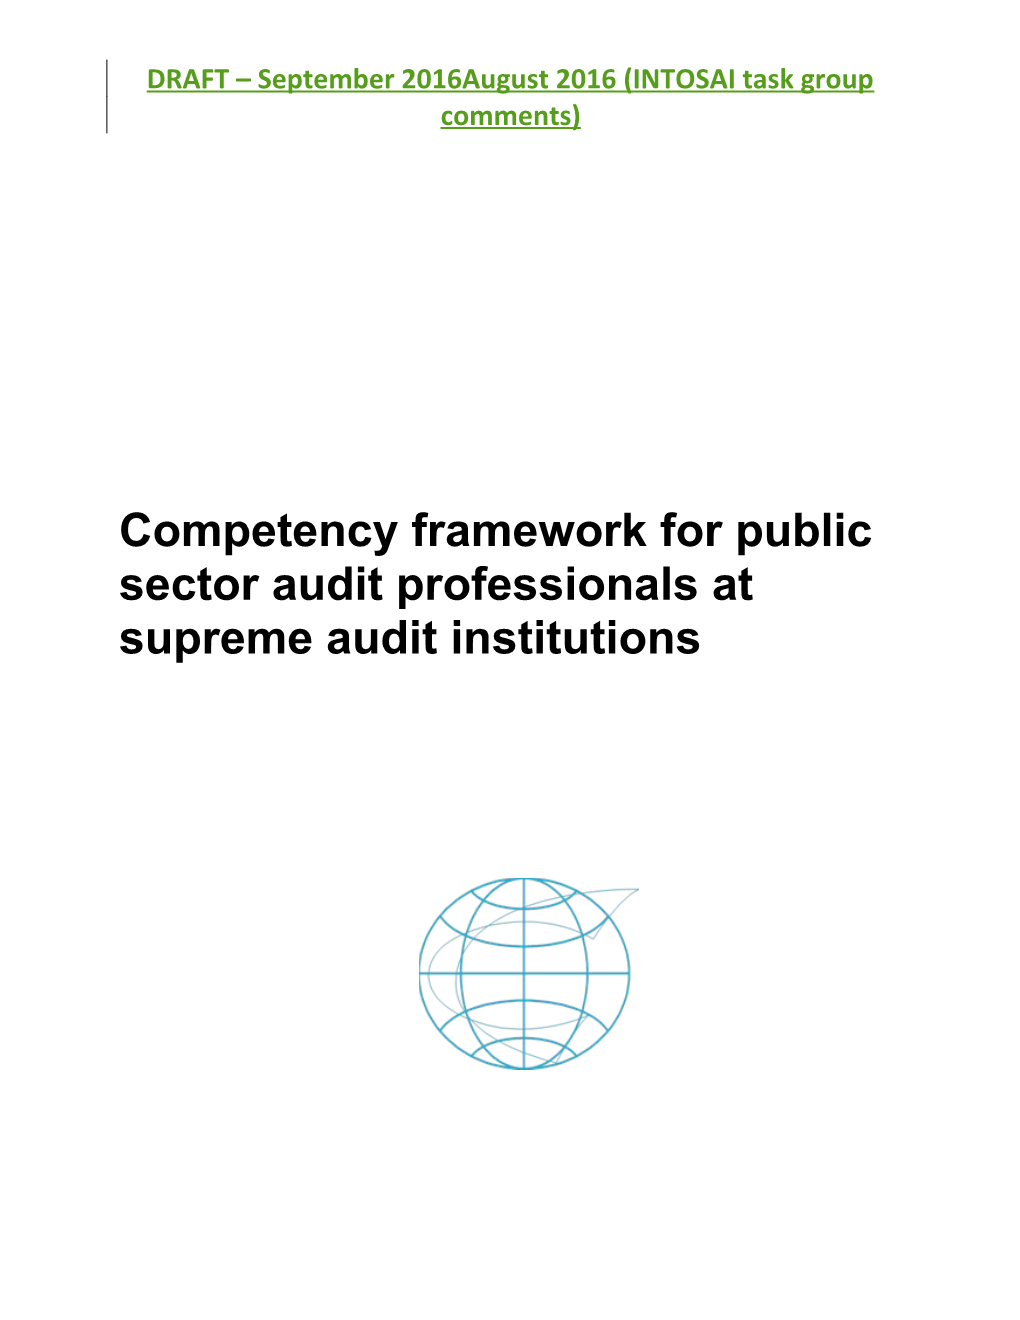 Competency Framework for Public Sector Audit Professionals at Supreme Audit Institutions